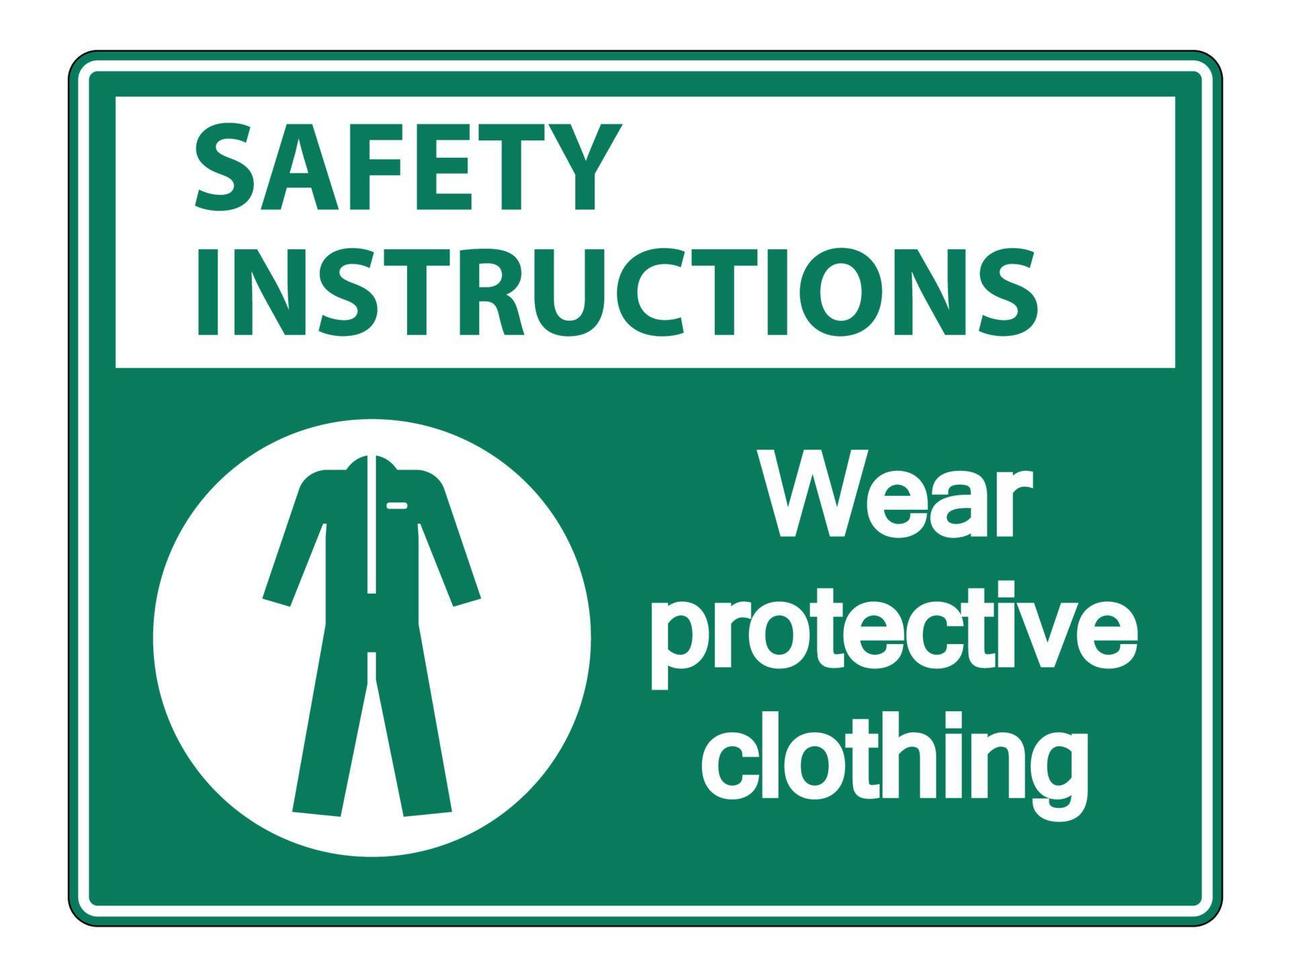 veiligheidsinstructies draag beschermende kleding teken op witte achtergrond vector